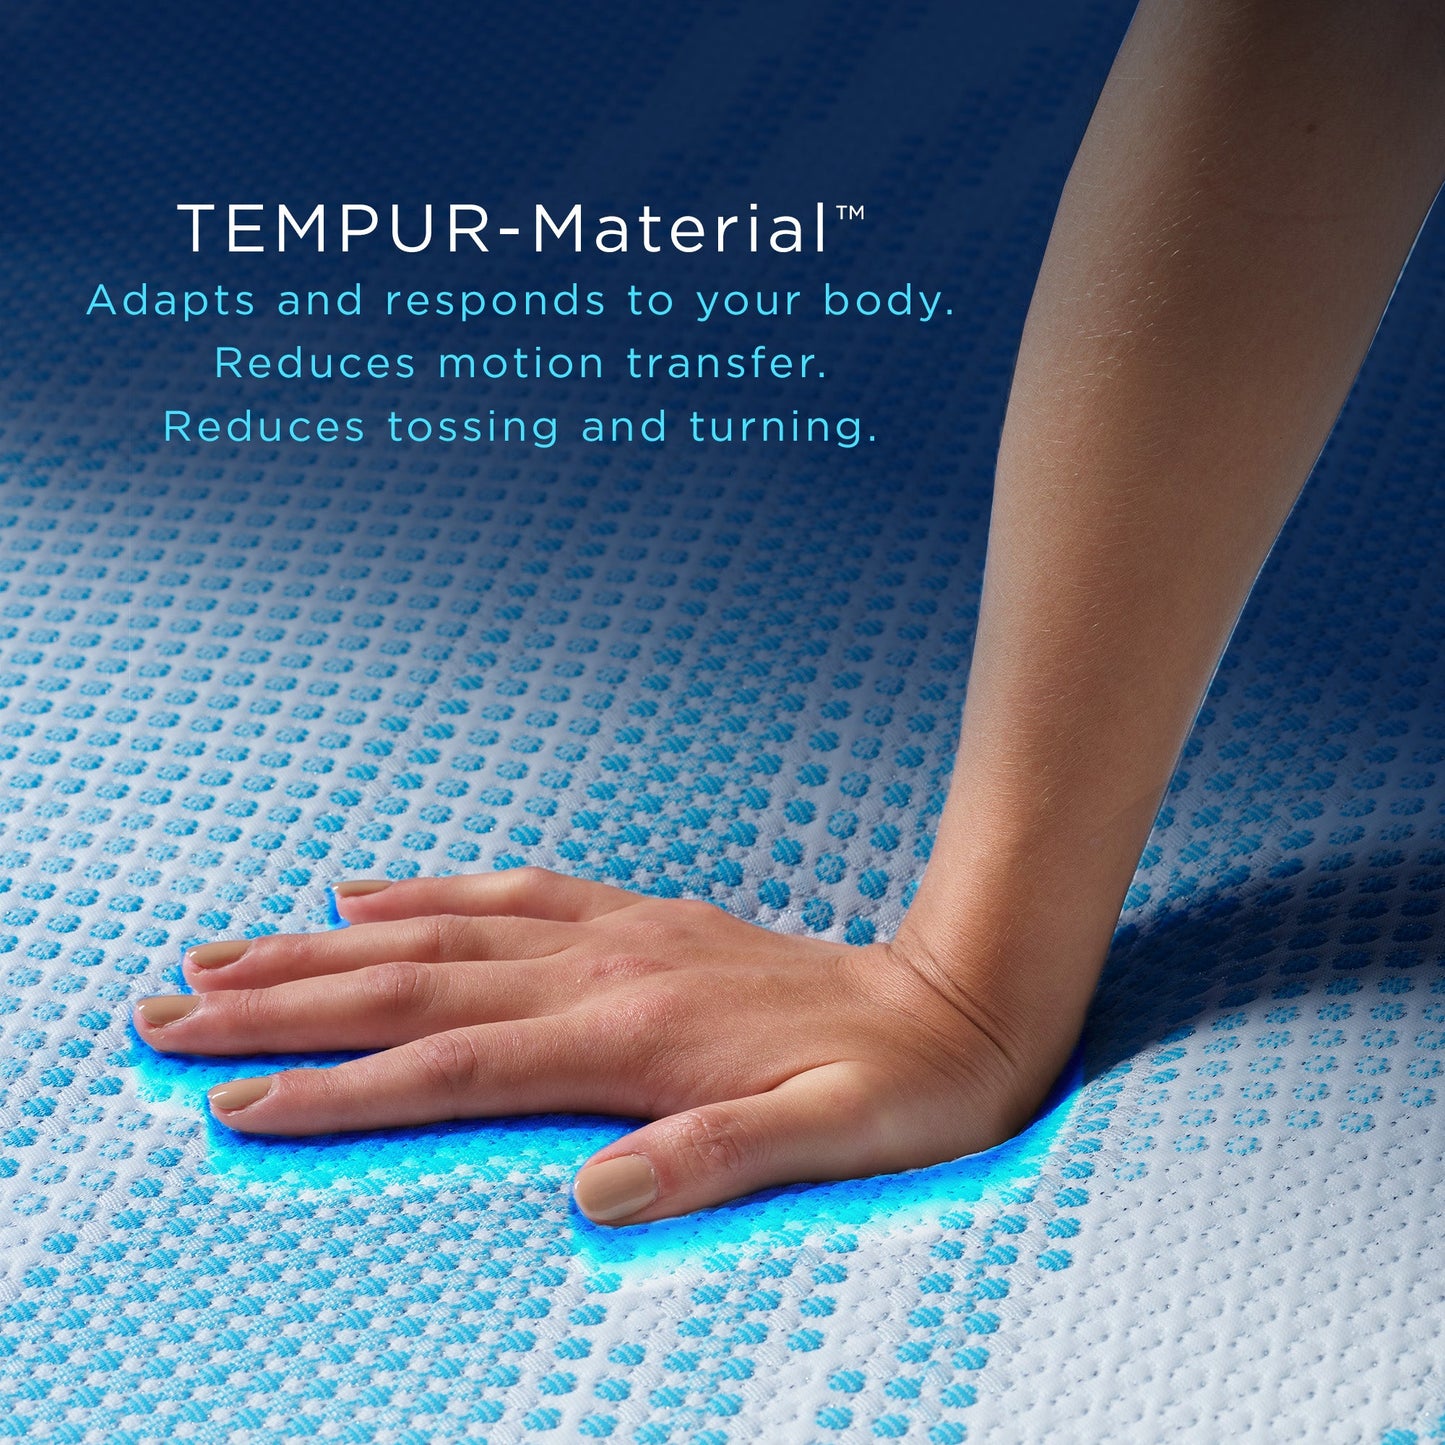 Tempur-Pedic Tempur-ProBreeze 2.0 Medium Hybrid Mattress reduces motion transfer